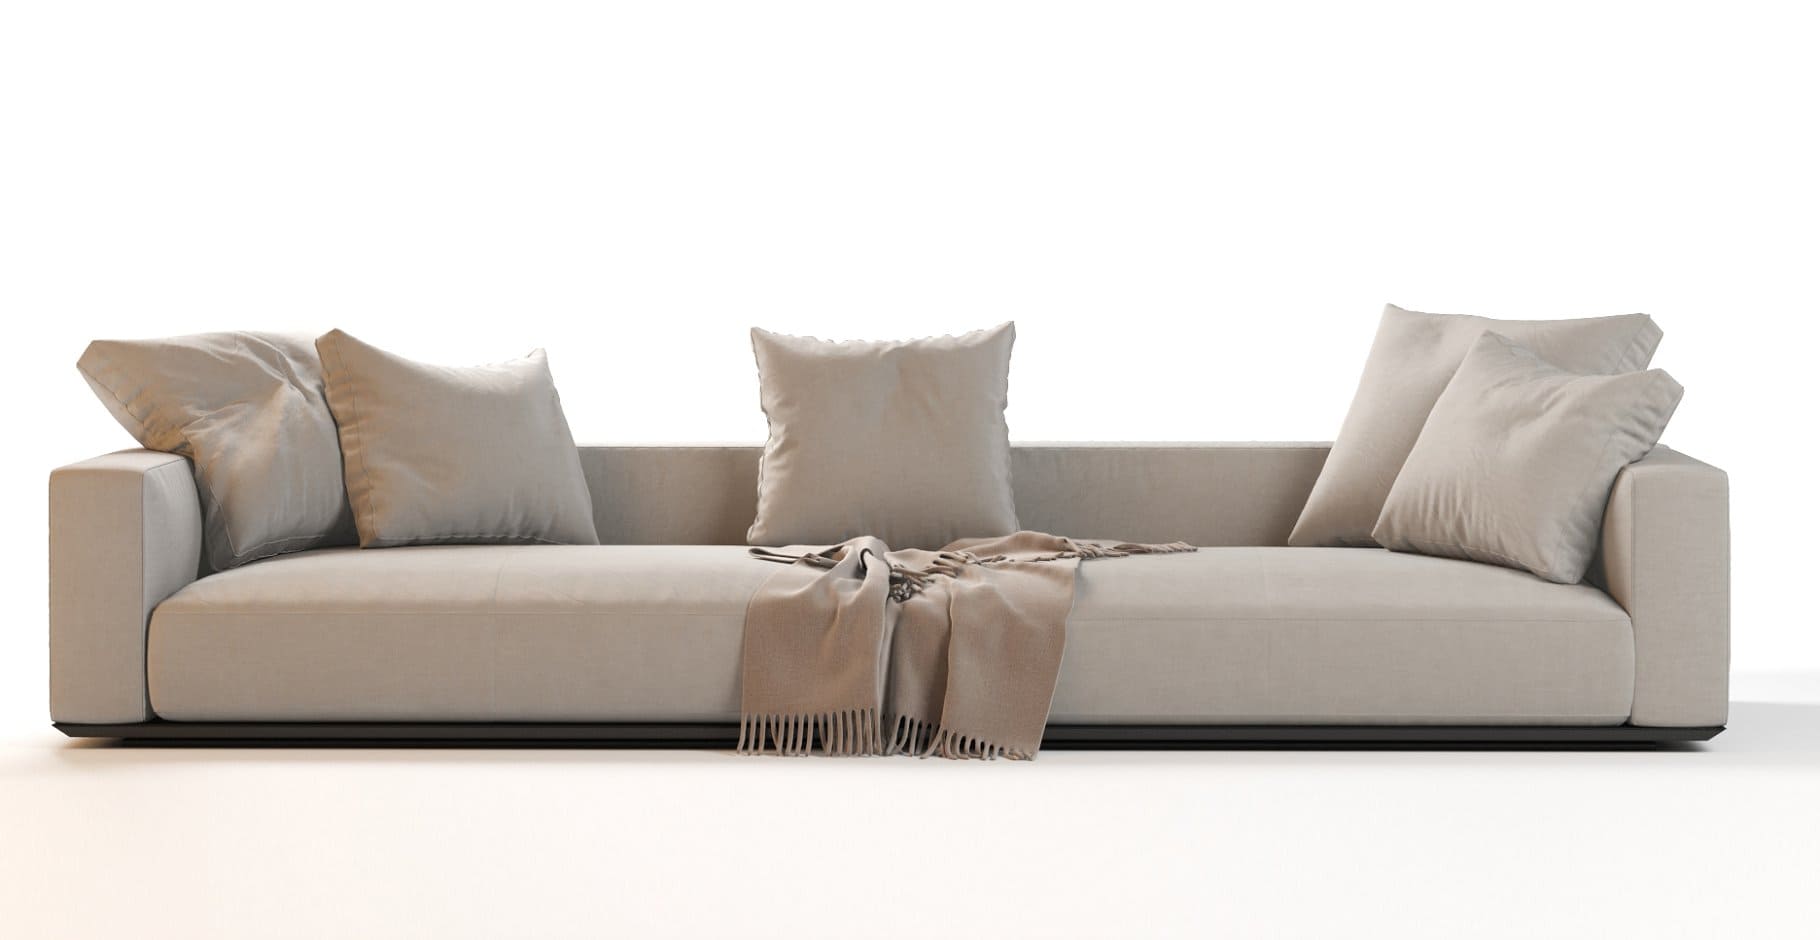 The Flexform Grandemare Sectional Sofa has a beige sheet.